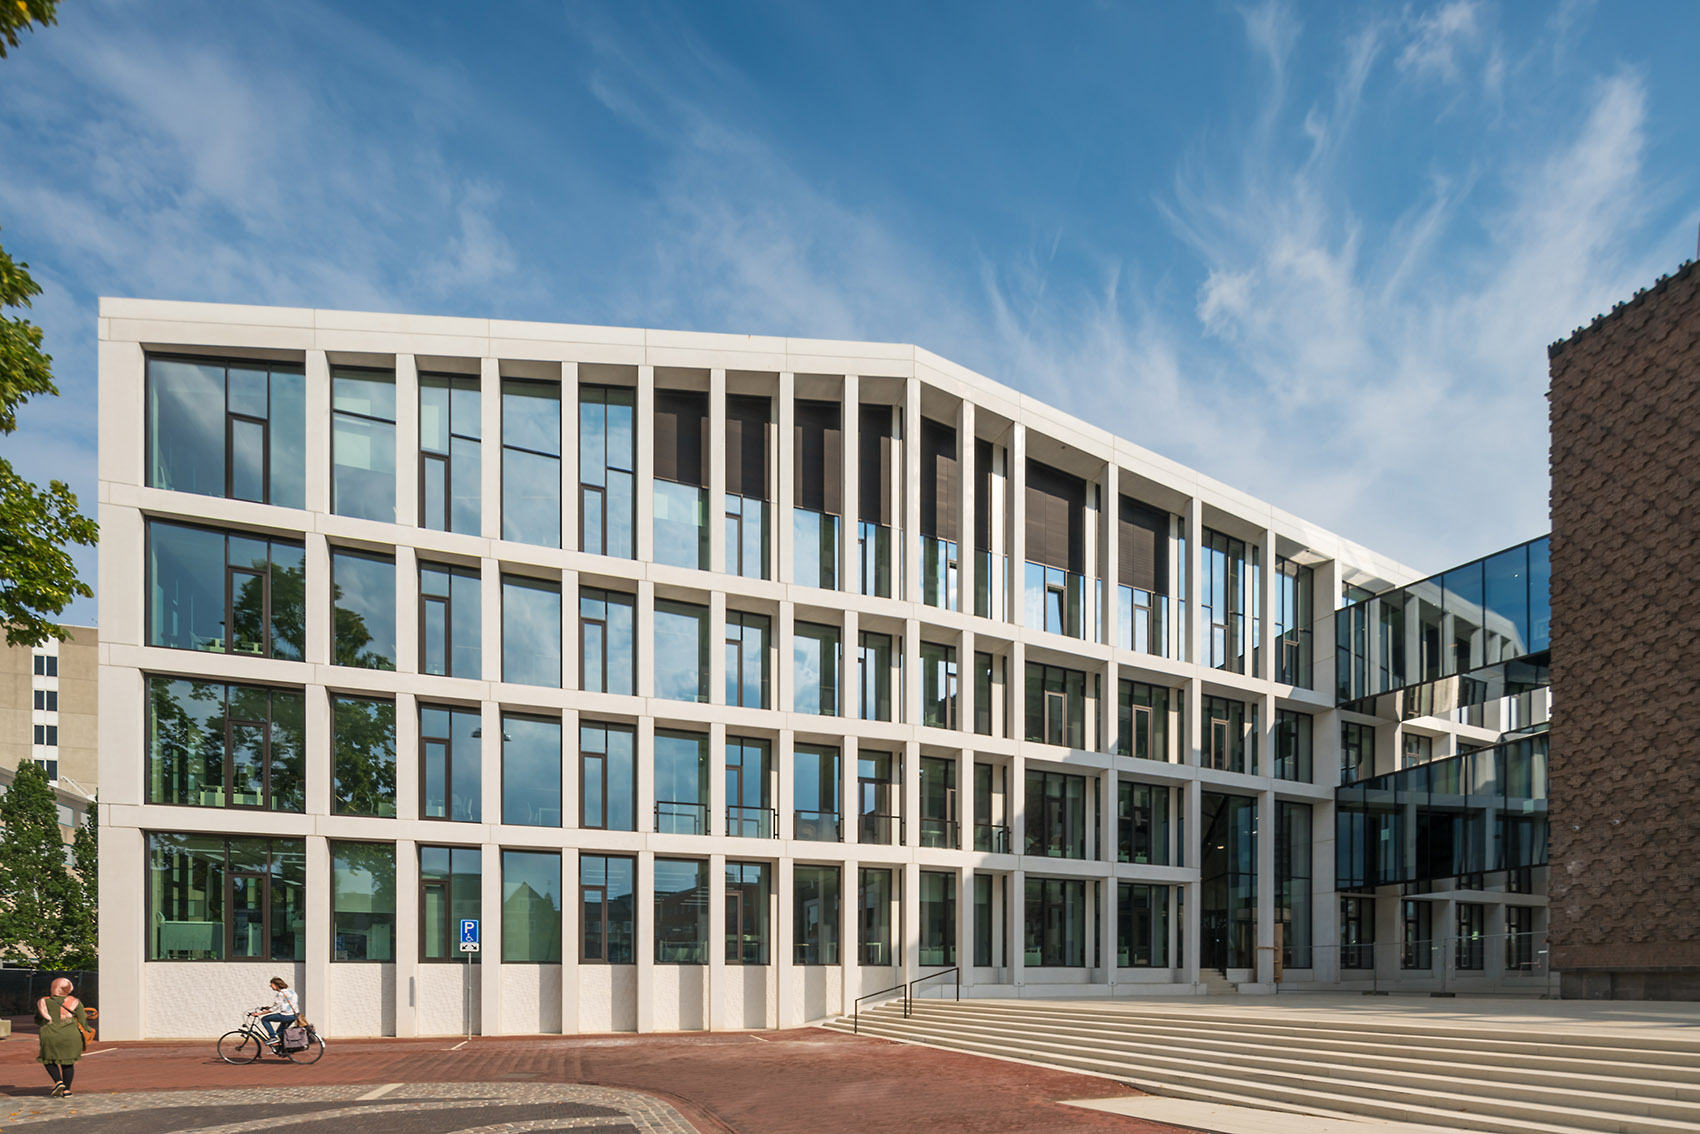 Gelderland省政厅，荷兰/新与旧，历史与创意、厚重与轻盈-61